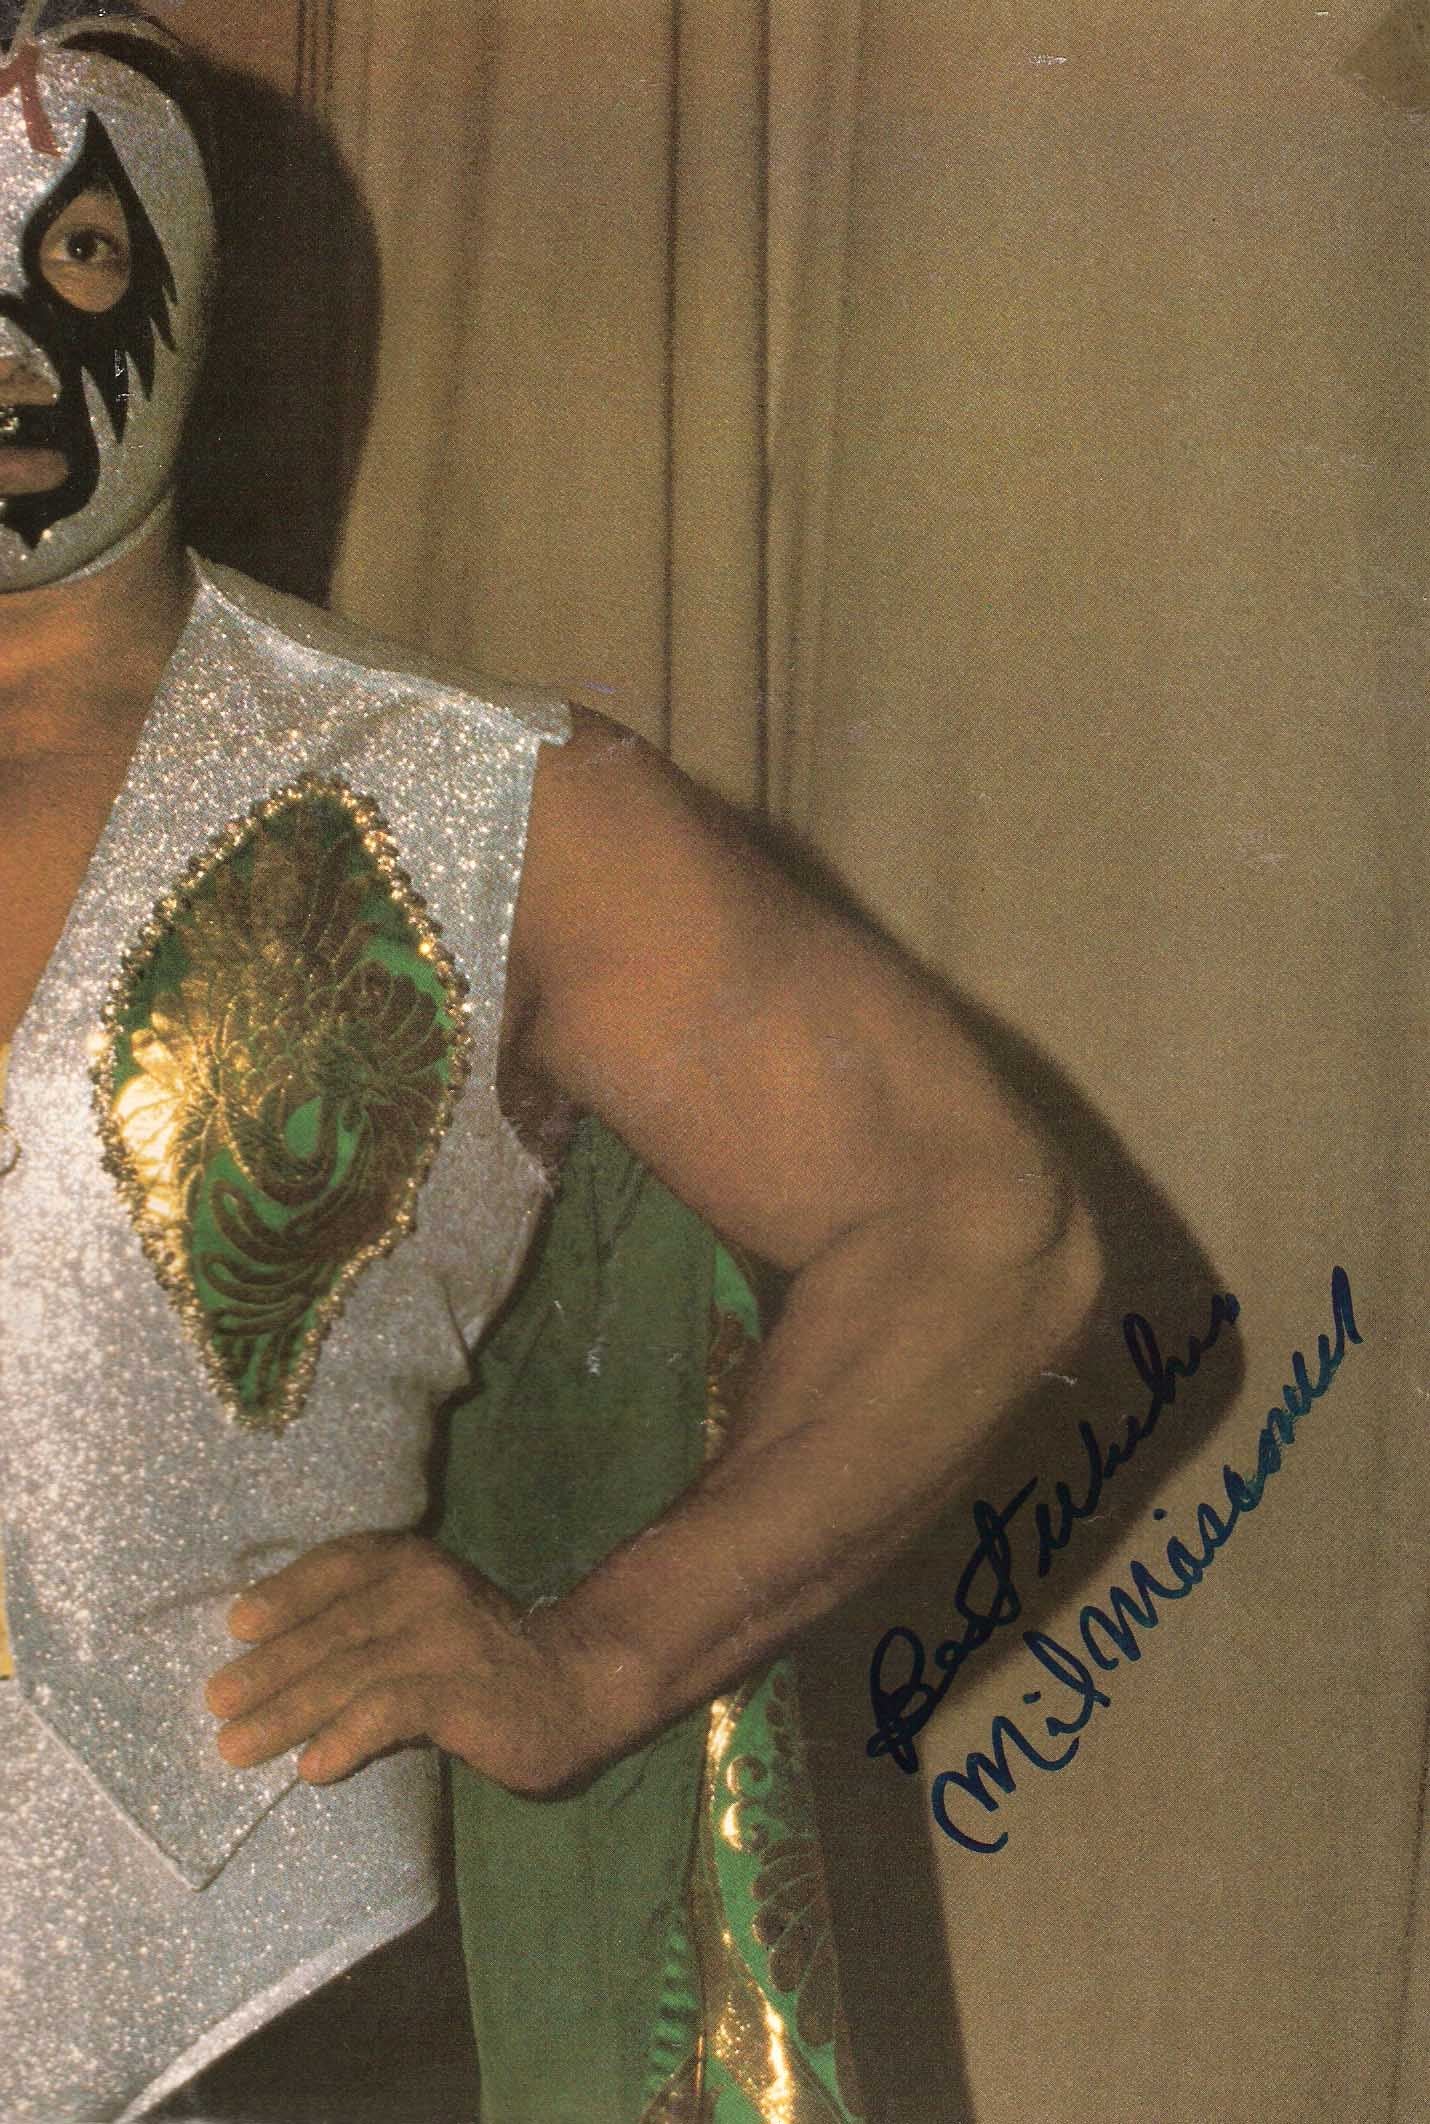 AM283 Ric Flair Jesse Ventura Sgt. Slaughter Mil Mascaras Barry Windham Autographed vintage Wrestling Magazine w/COA